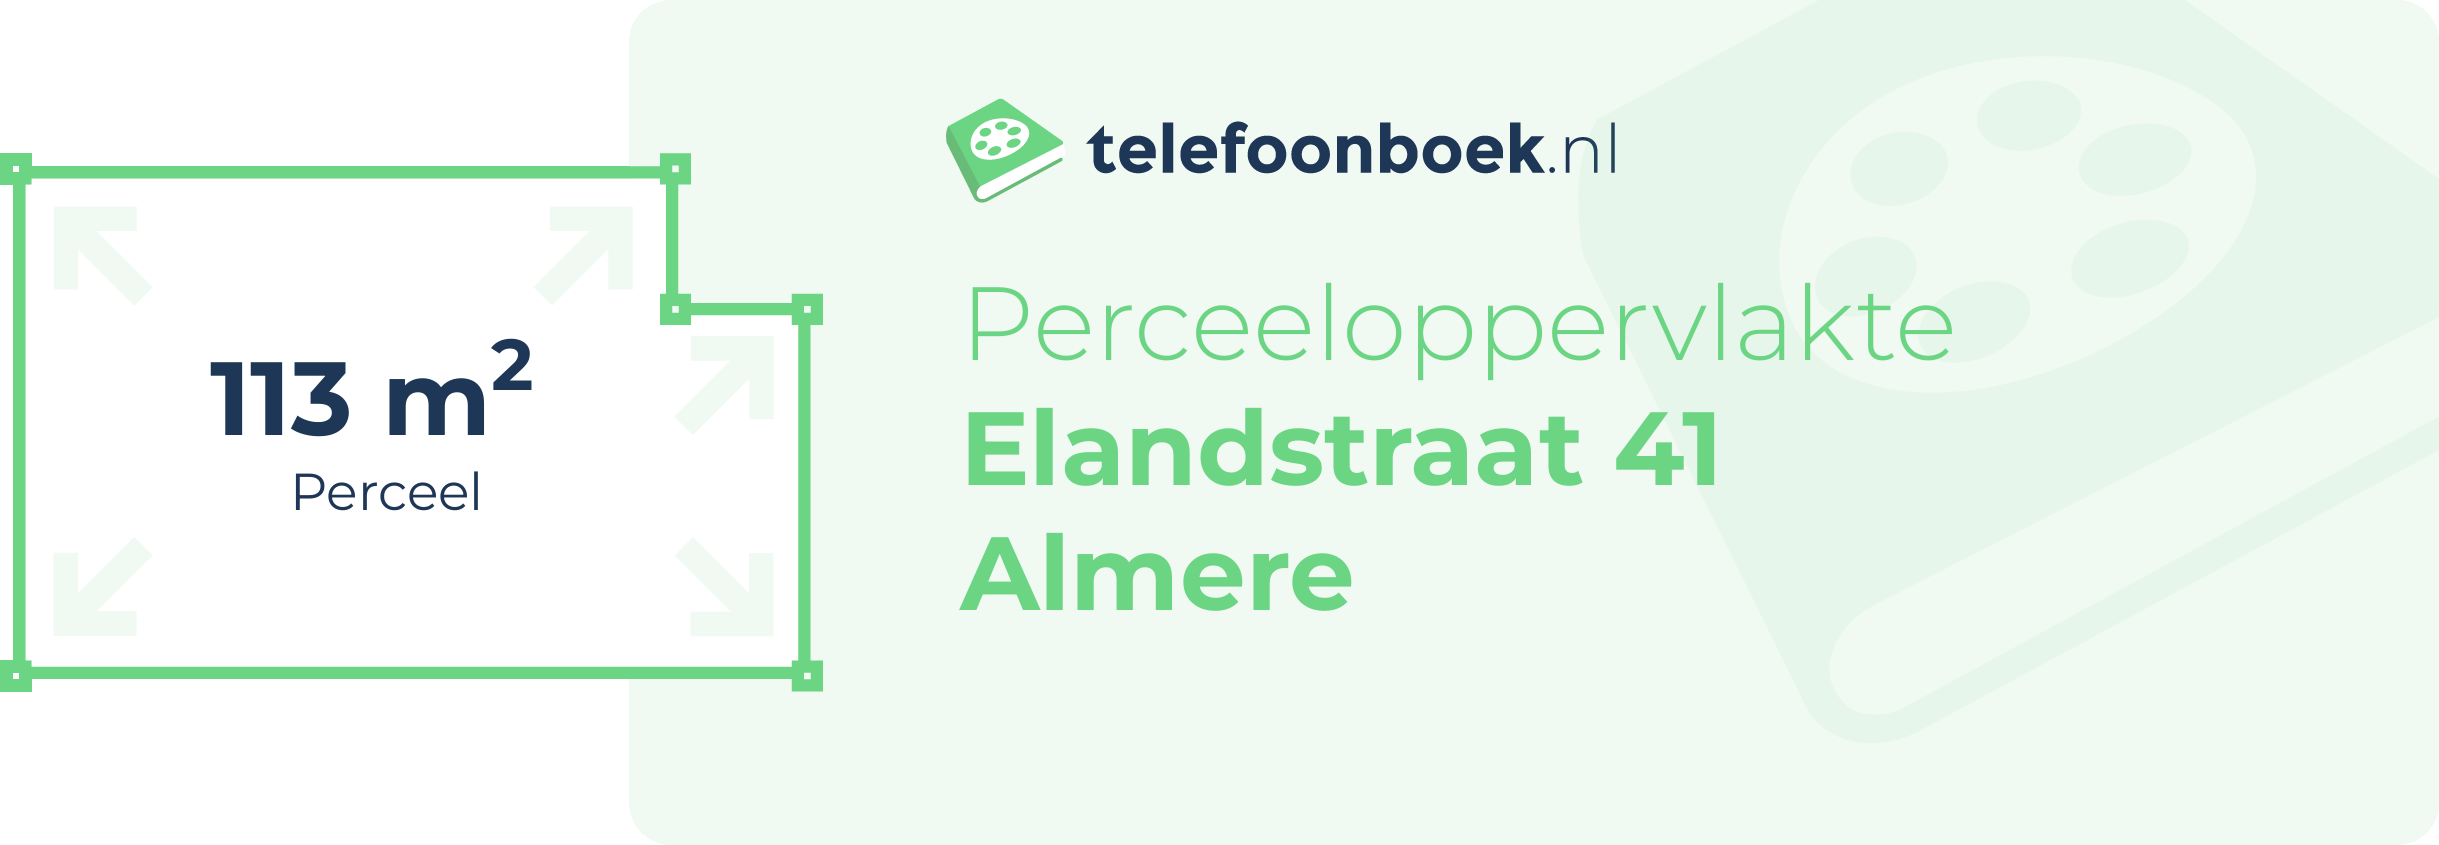 Perceeloppervlakte Elandstraat 41 Almere